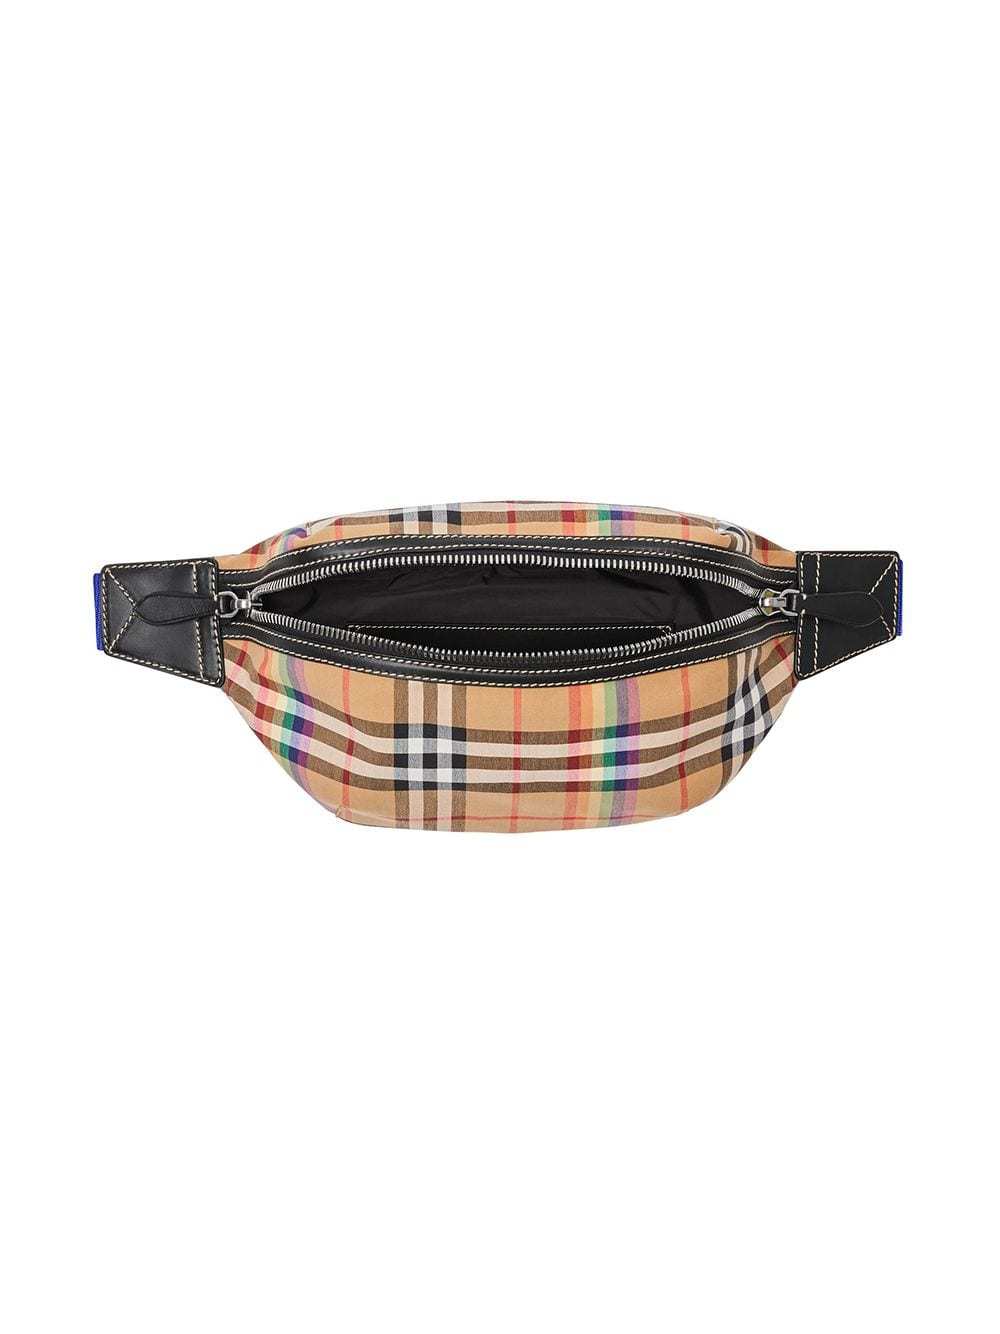 burberry belt bag outfit｜TikTok Search